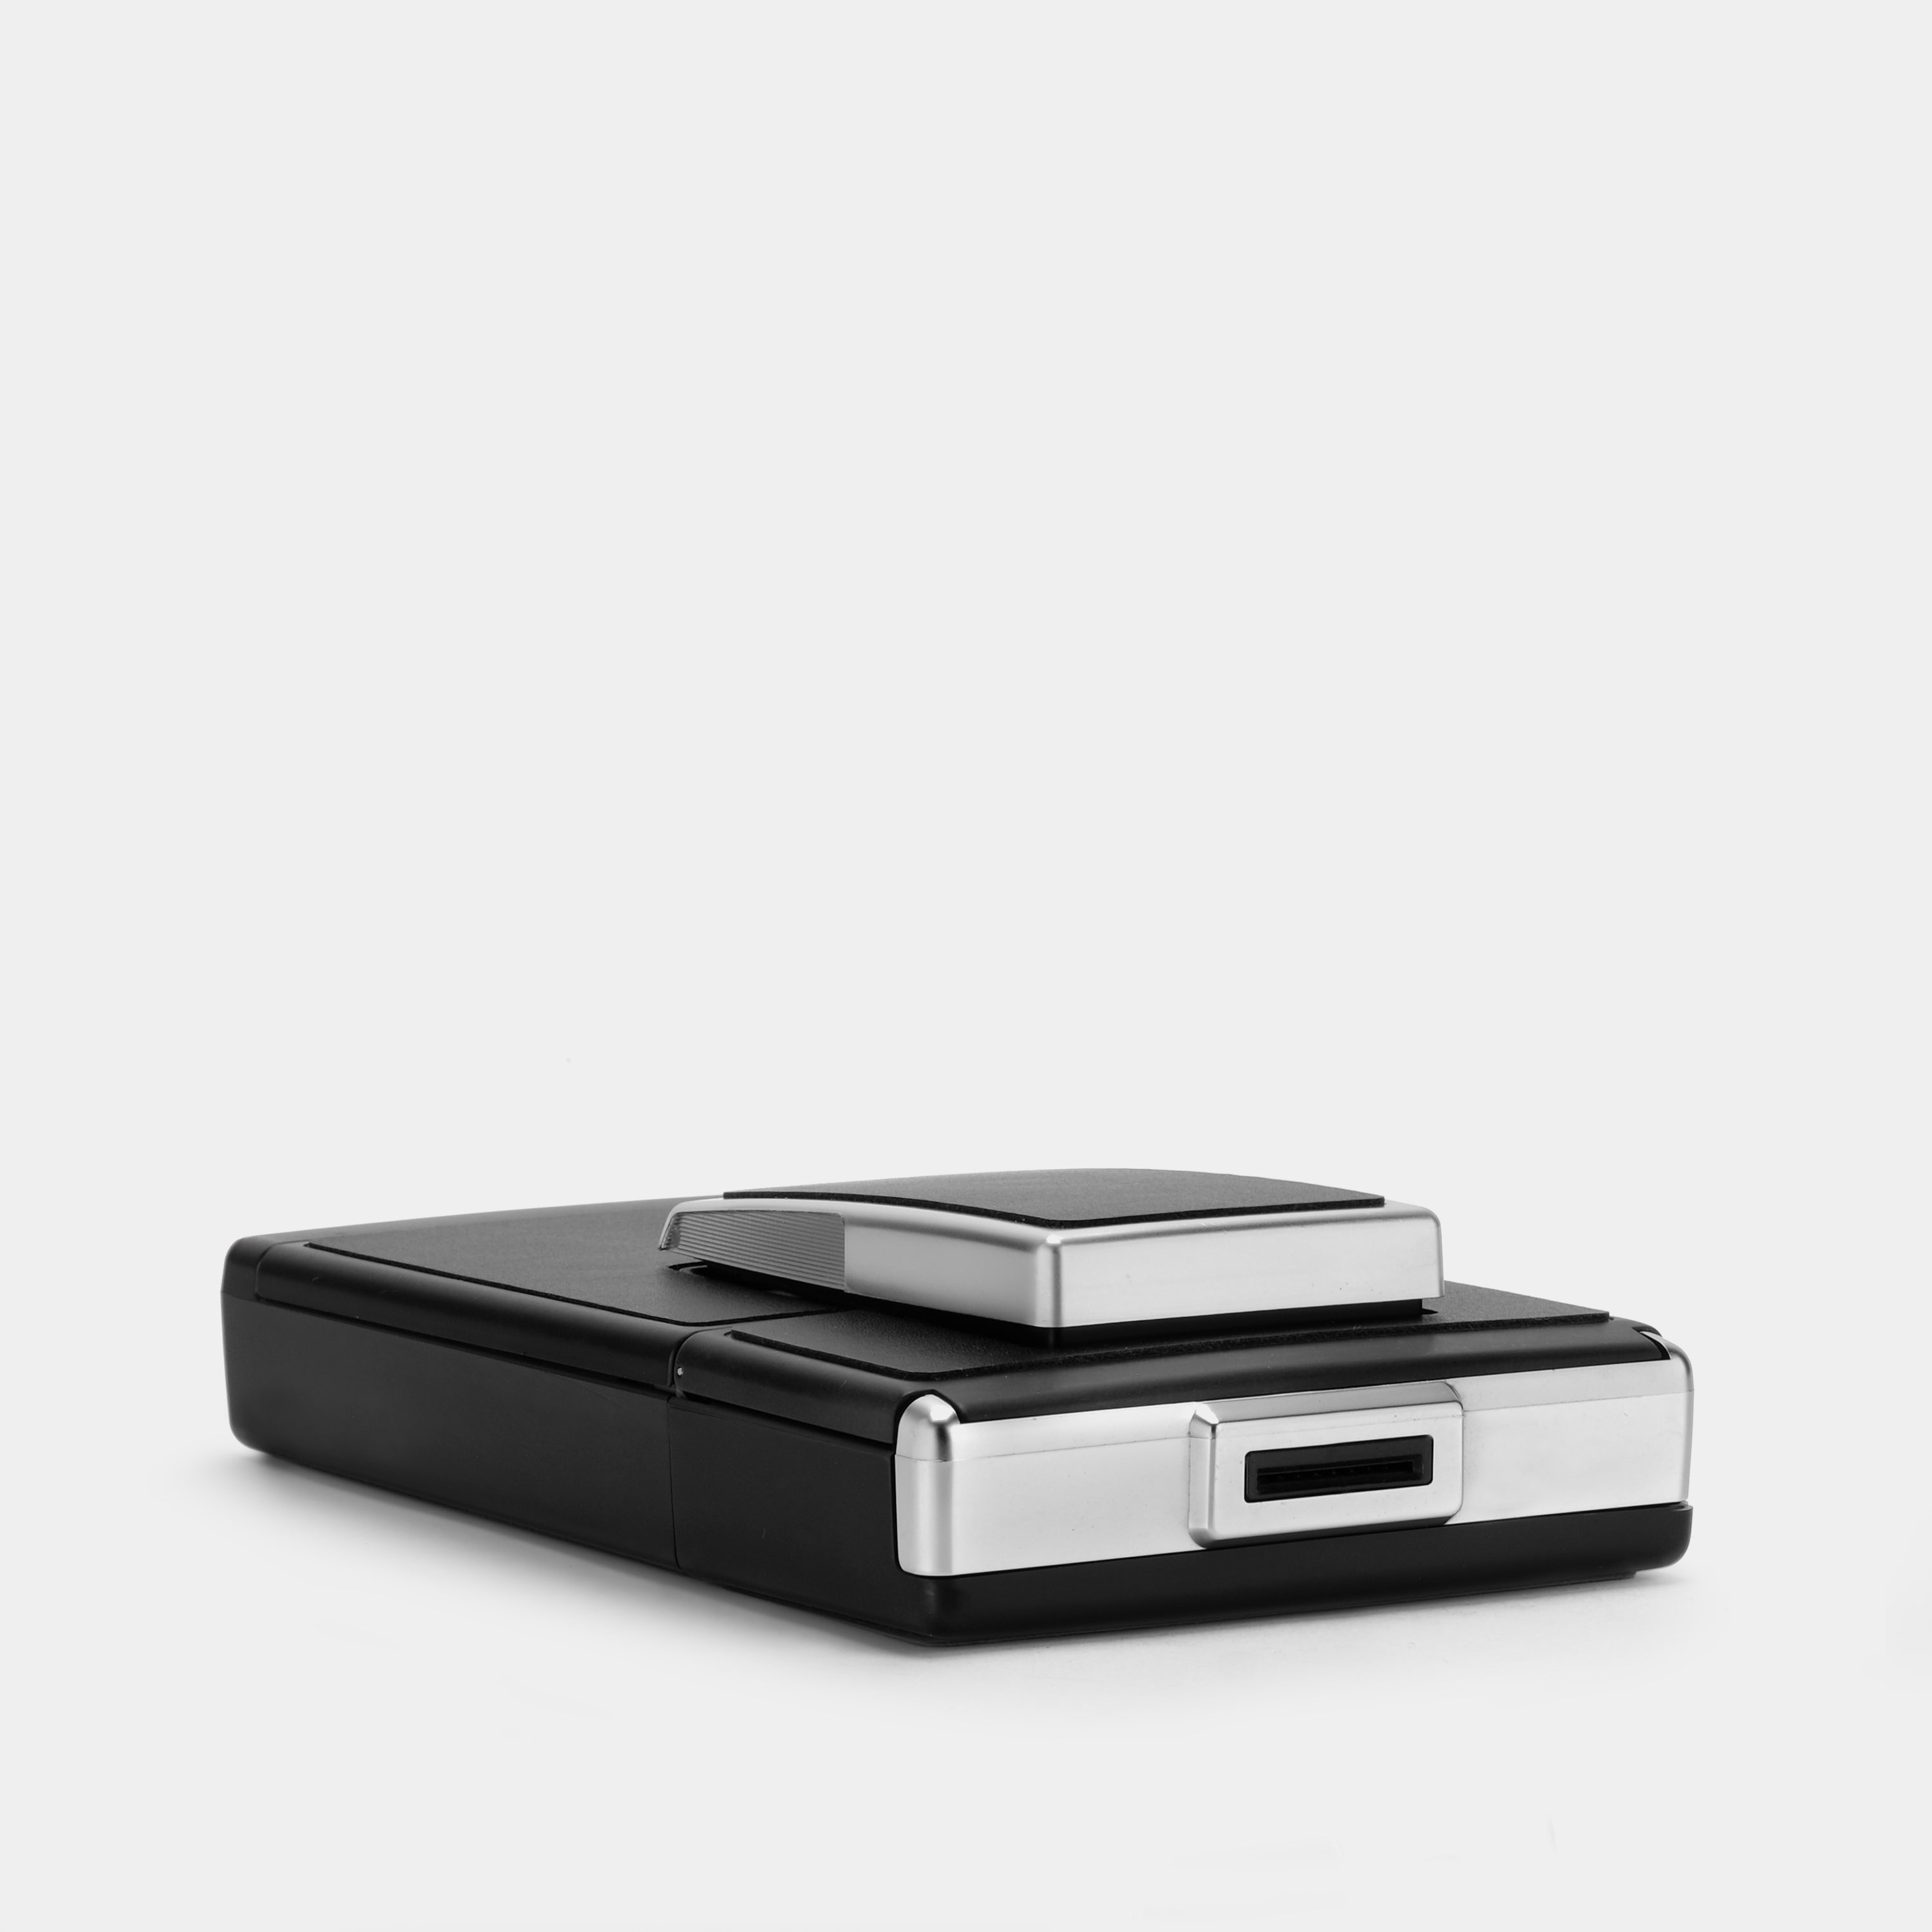 Polaroid SX-70 Model 2 Black with Chrome Folding Instant Film Camera